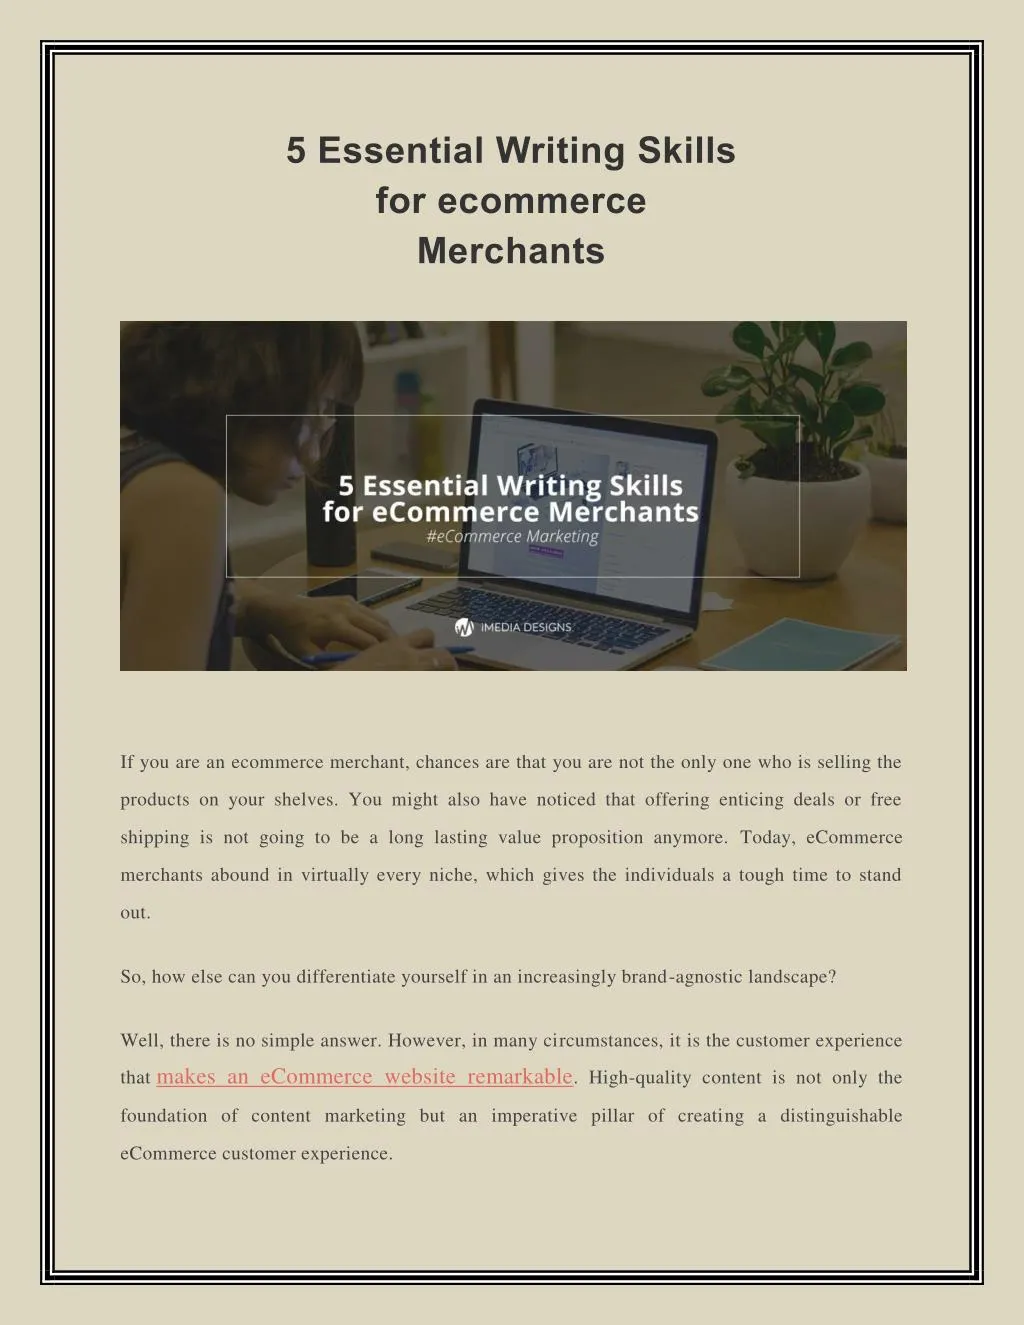 5 essential writing skills for ecommerce merchants